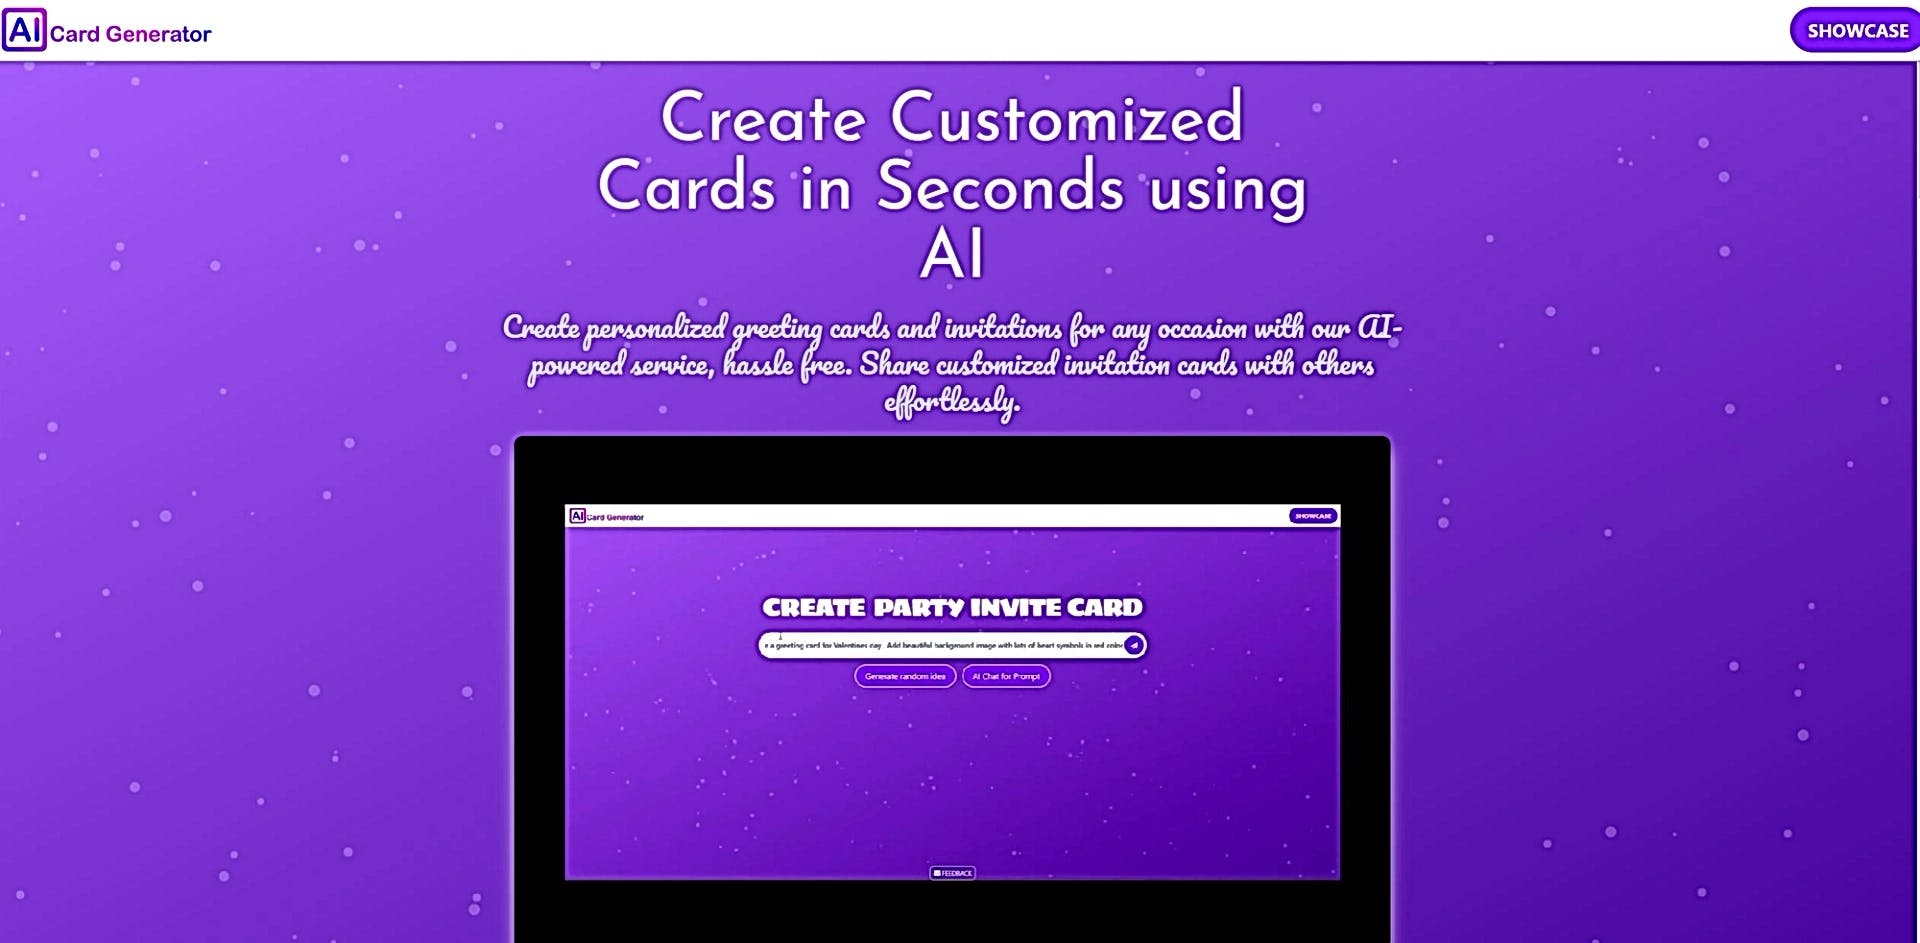 AI Card Generator featured